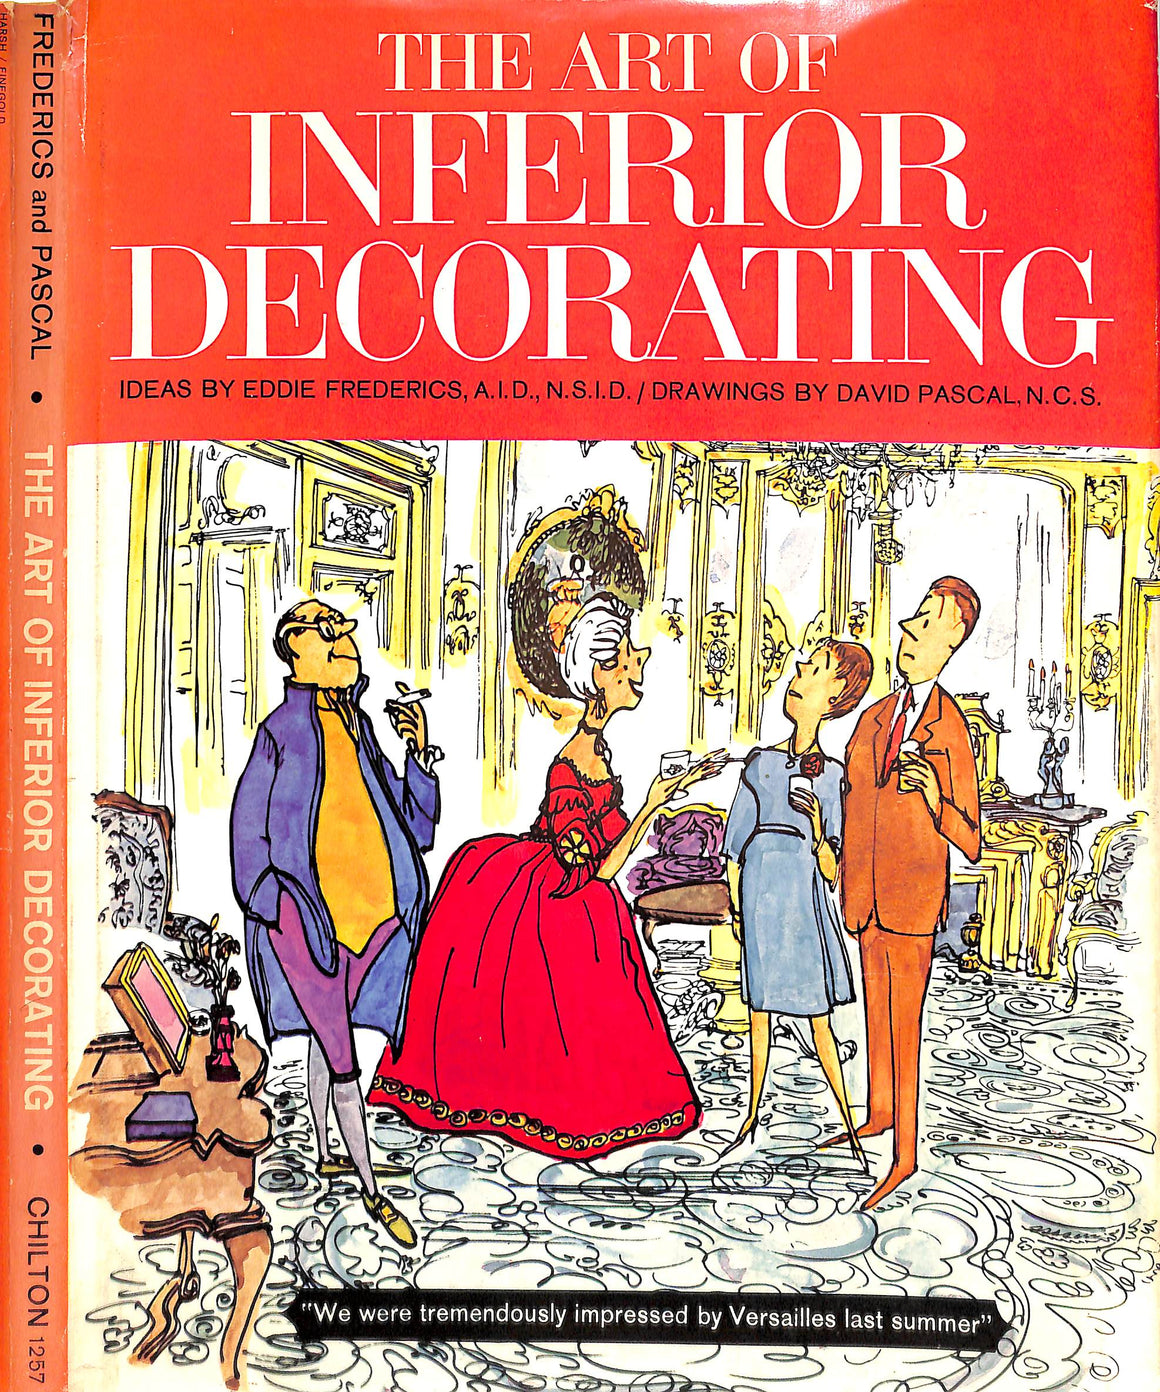 "The Art Of Inferior Decorating" 1963 FREDERICS, Eddie [ideas by]